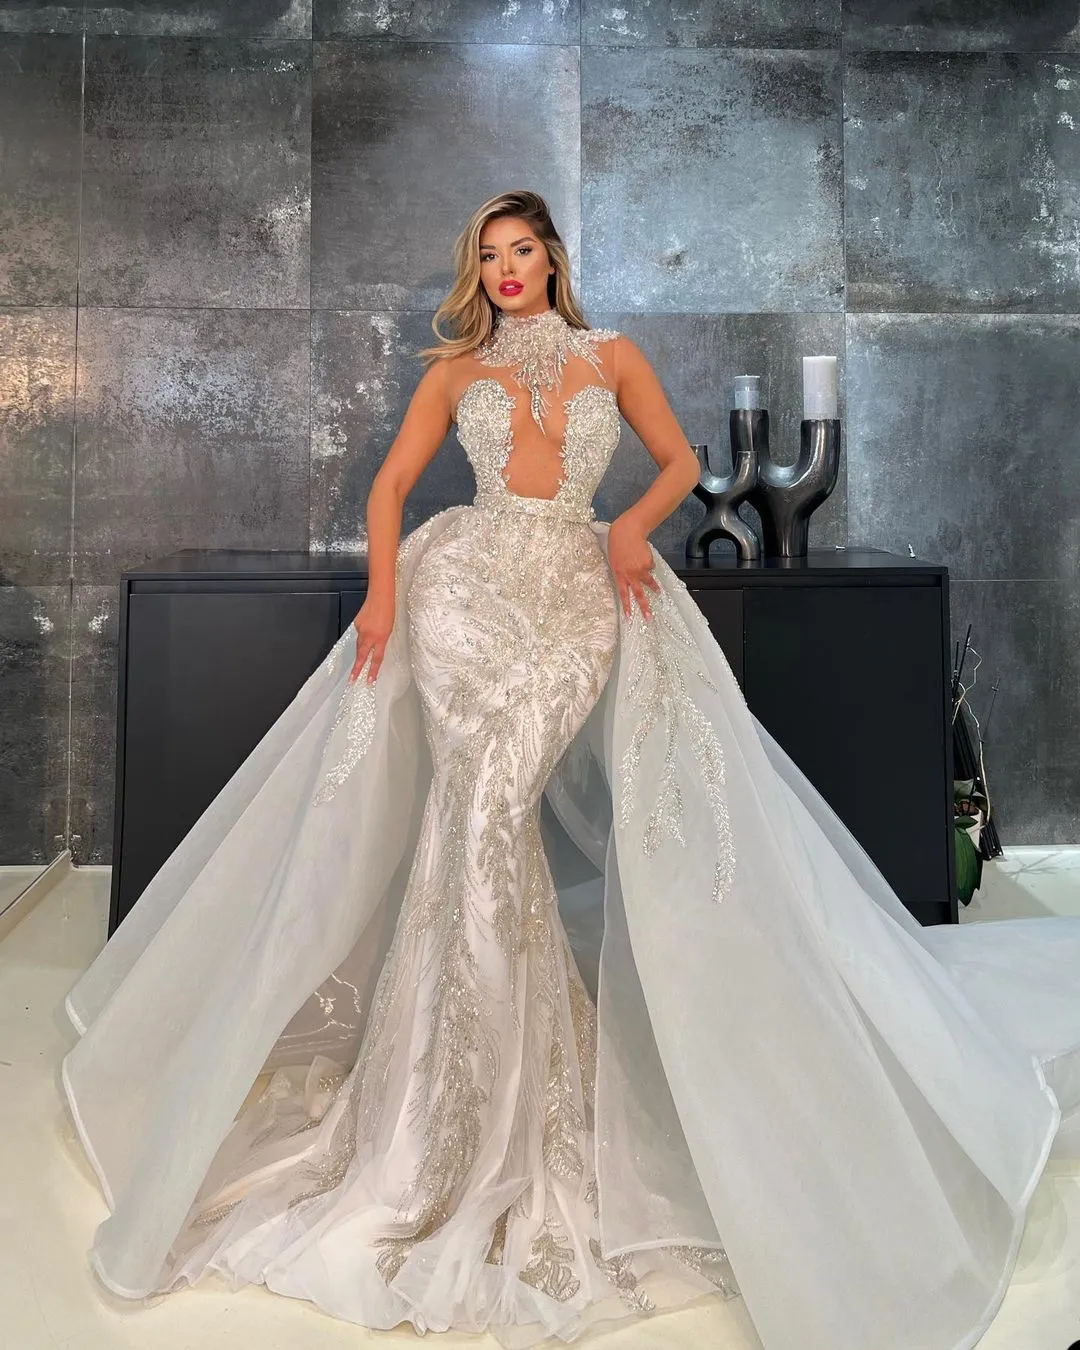 Glamorous Mermaid Wedding Dresses High Neck Art Deco-inspired Neck Sleeveless Beads Belt Lace Up Court Gown Custom Made Plus Size Bridal Gown Vestidos De Novia